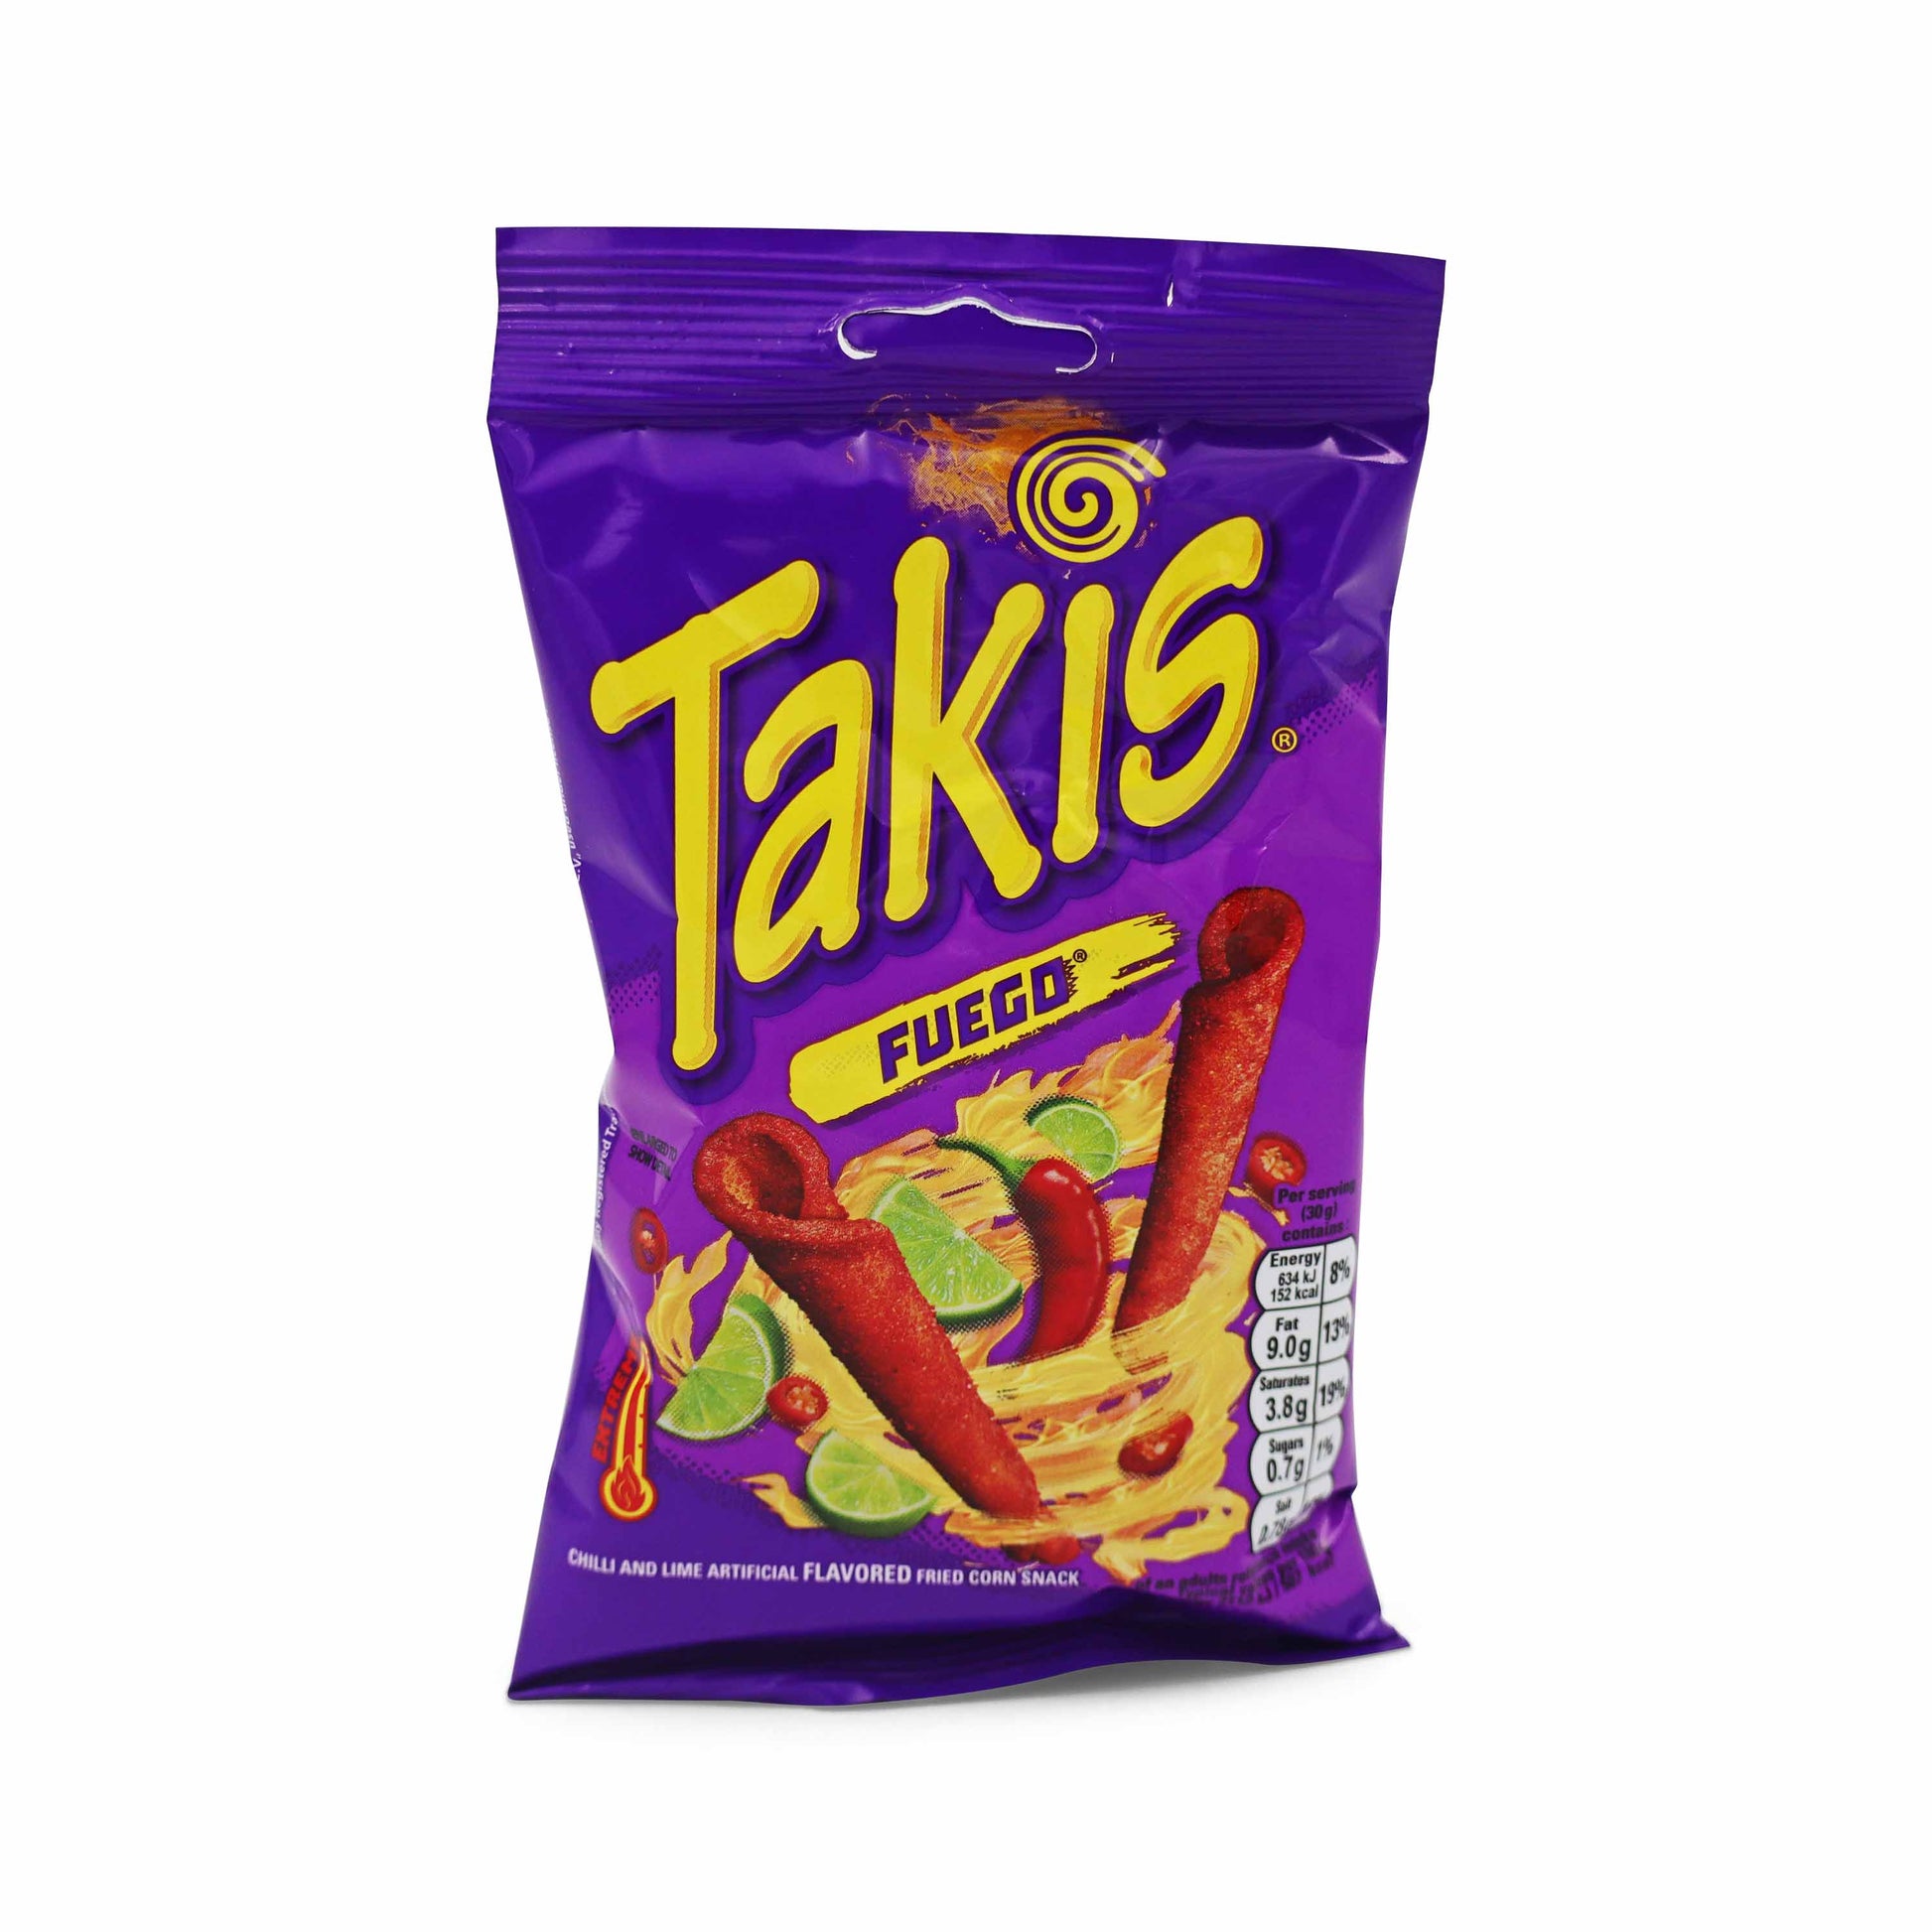 Takis Fuego 56g Crisps - Mexican American Snacks